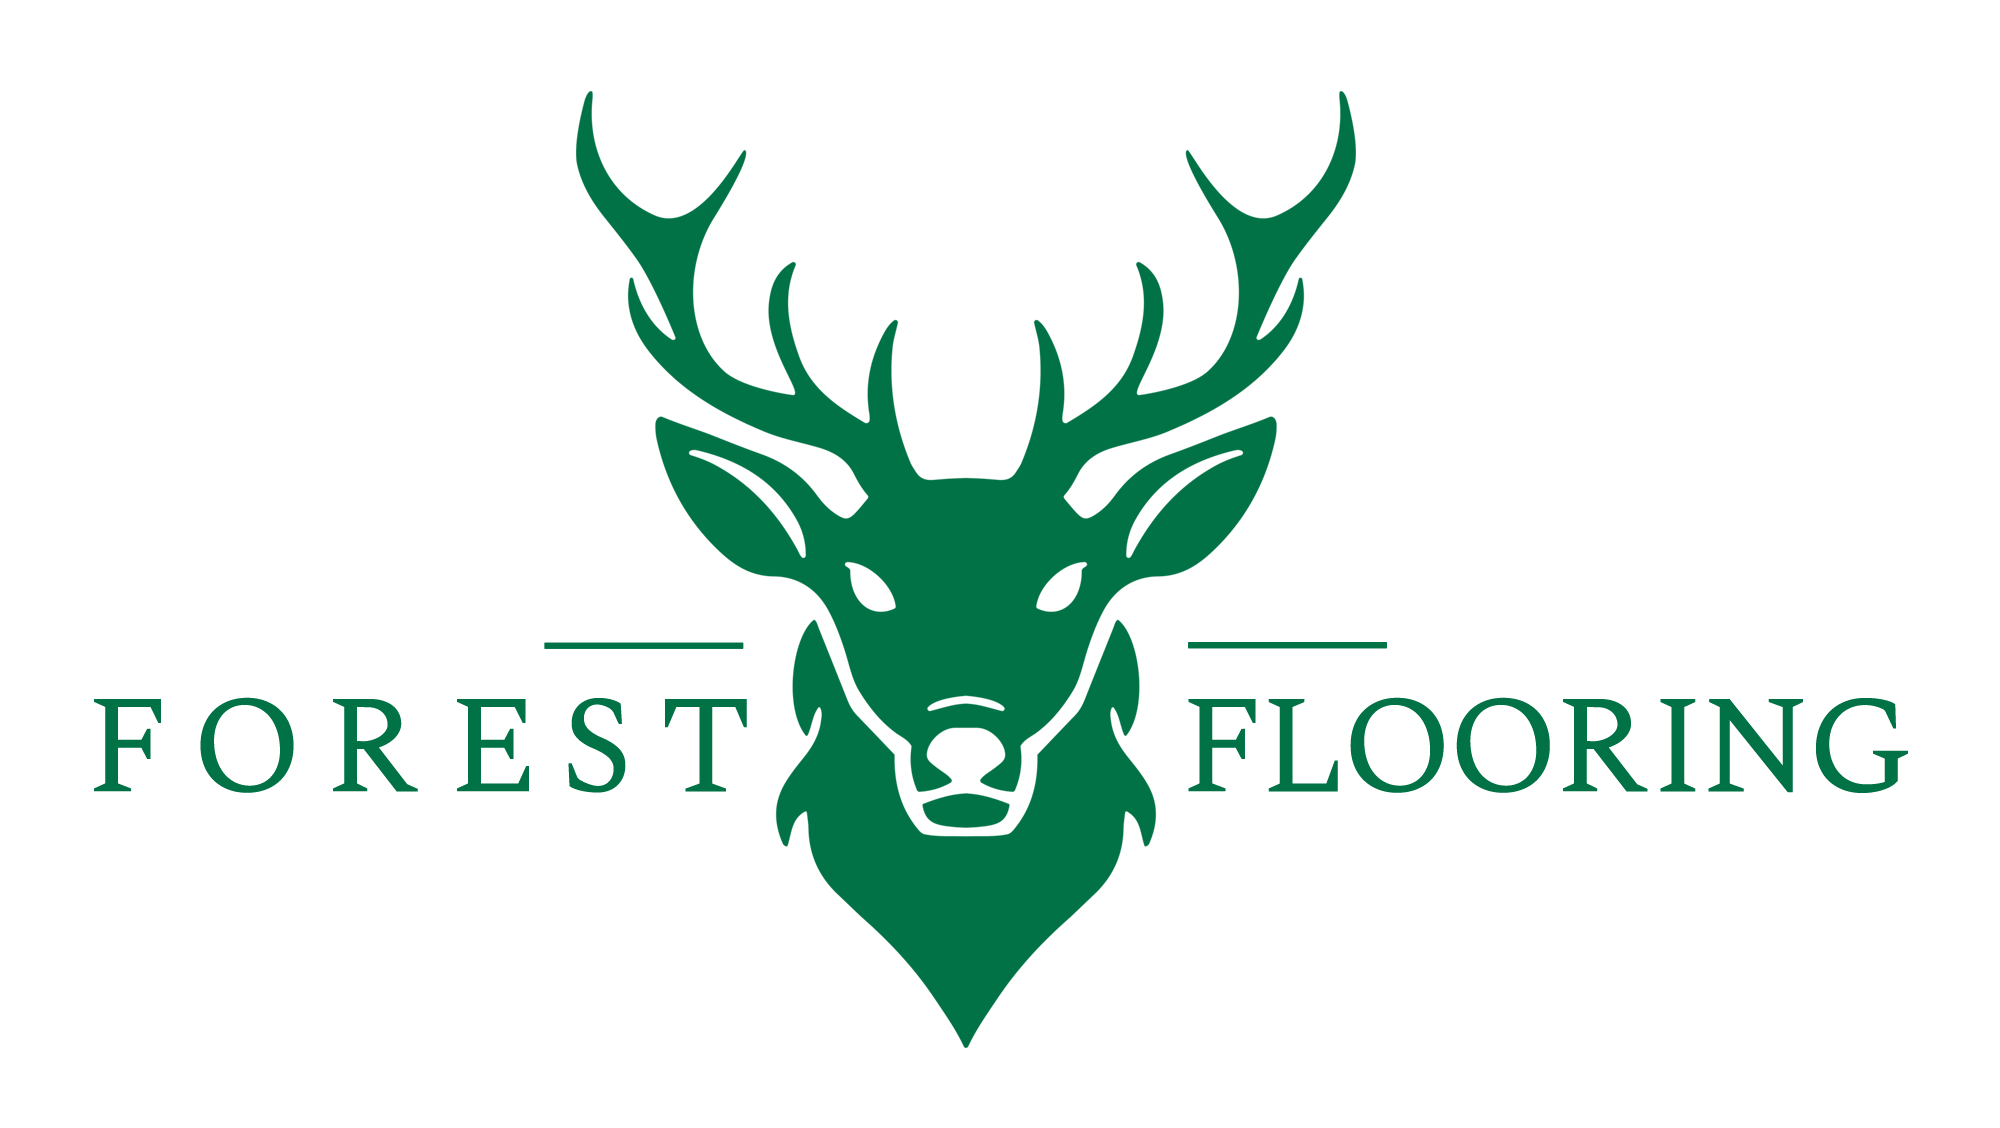 Forest Flooring Ltd